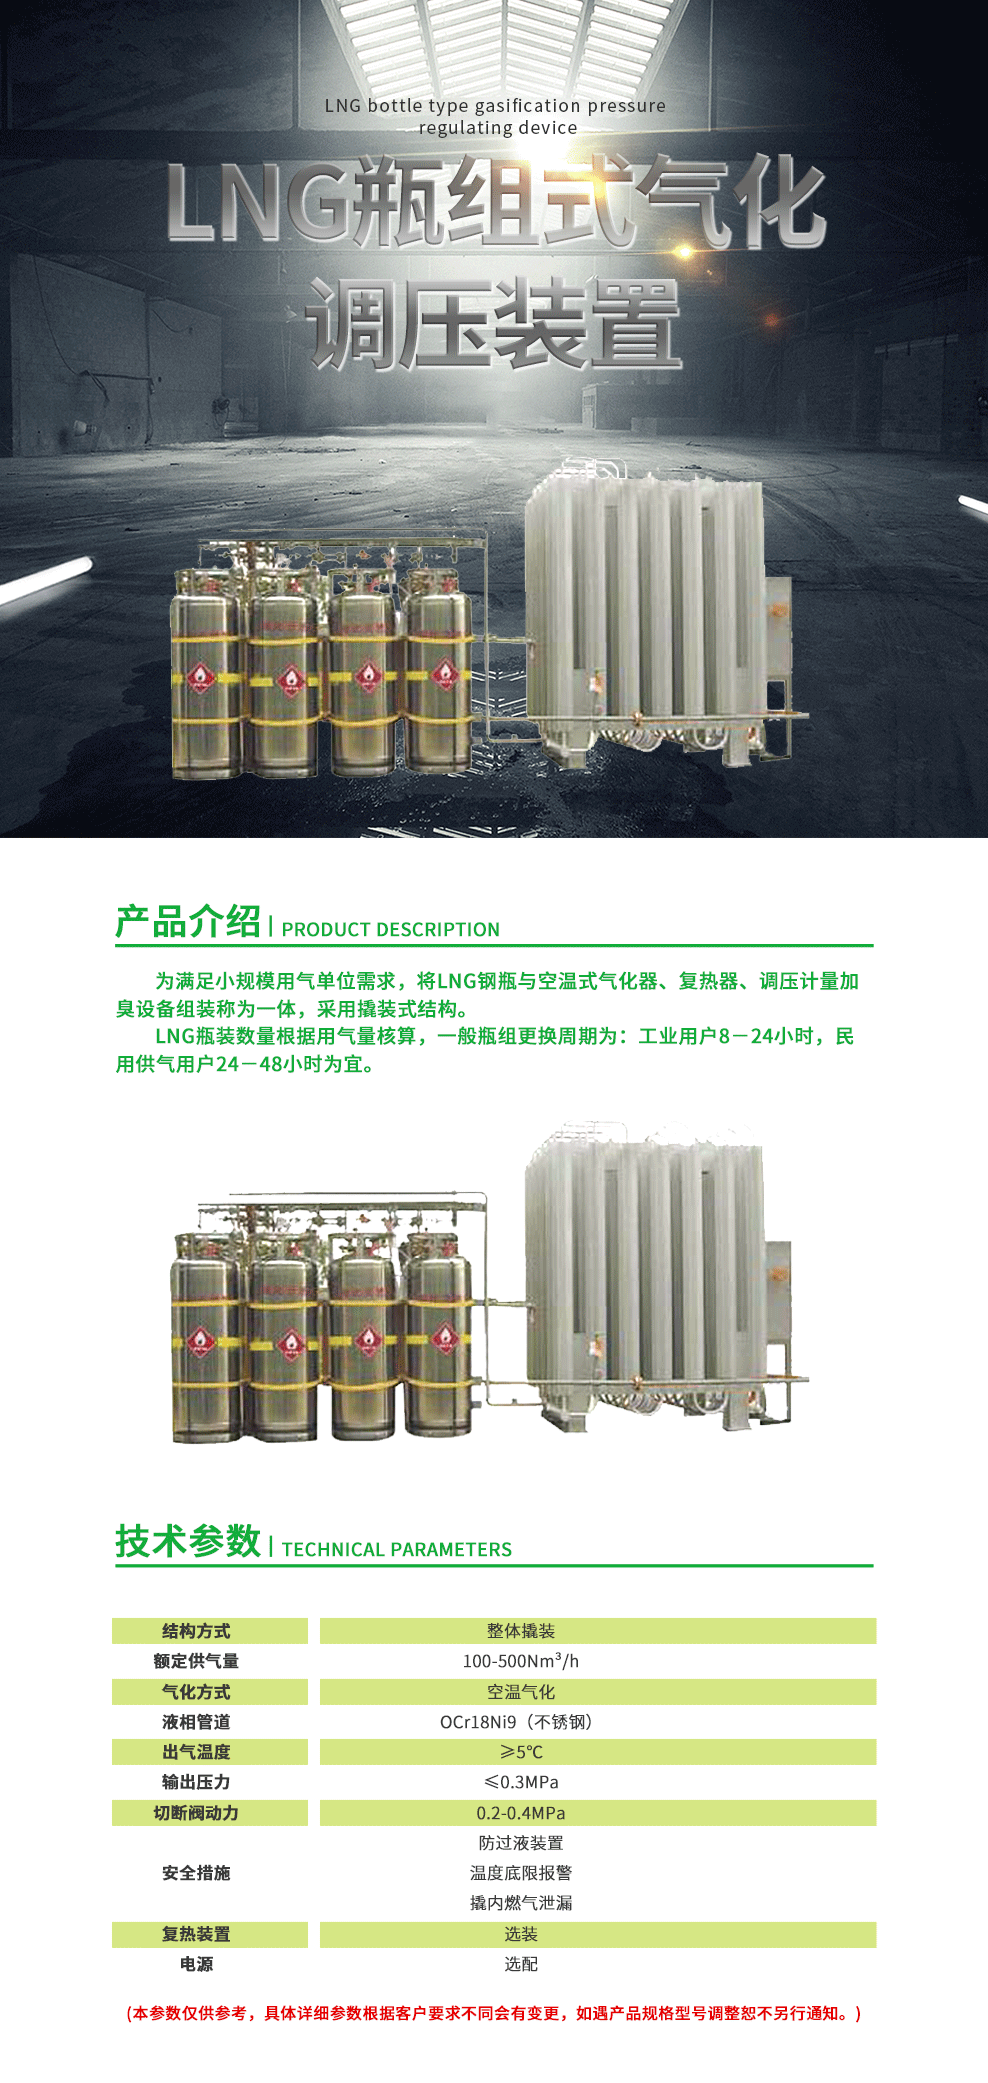 8-LNG瓶组式气化调压装置.png